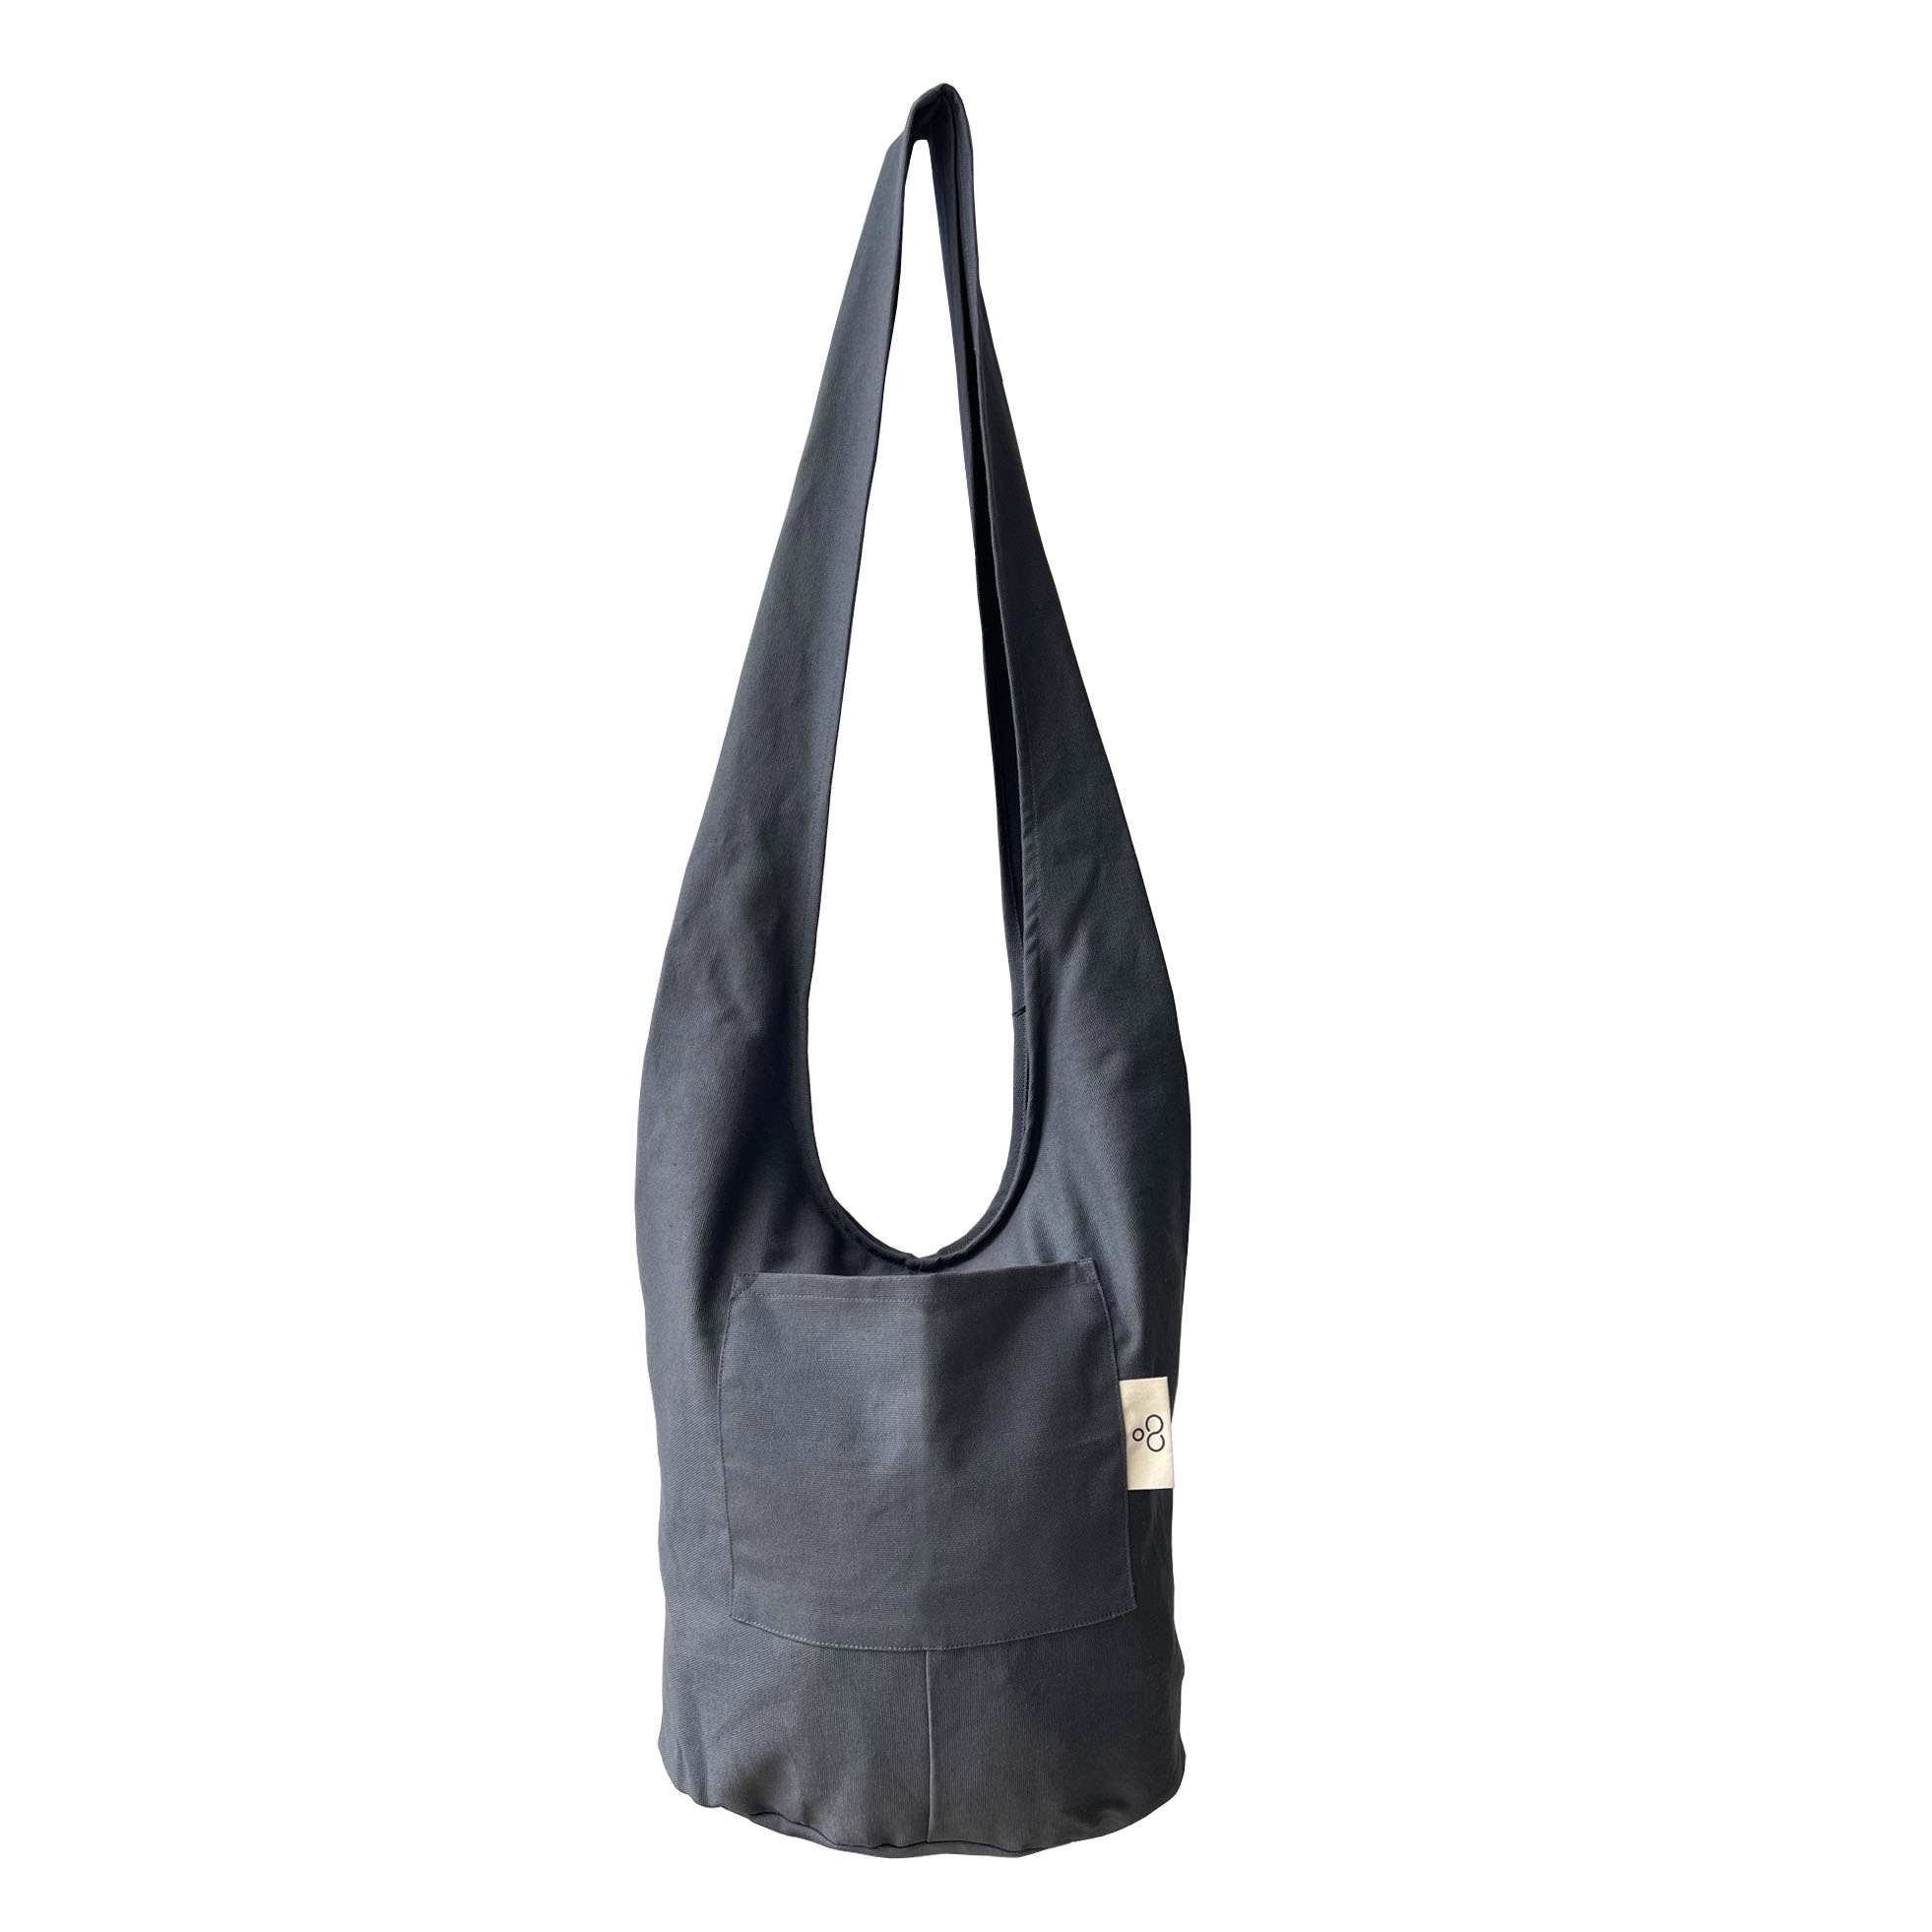 affix bay Discourse Grey color shoulder cross-body style yoga monk bag, Bohemian Hippie style  sling bag